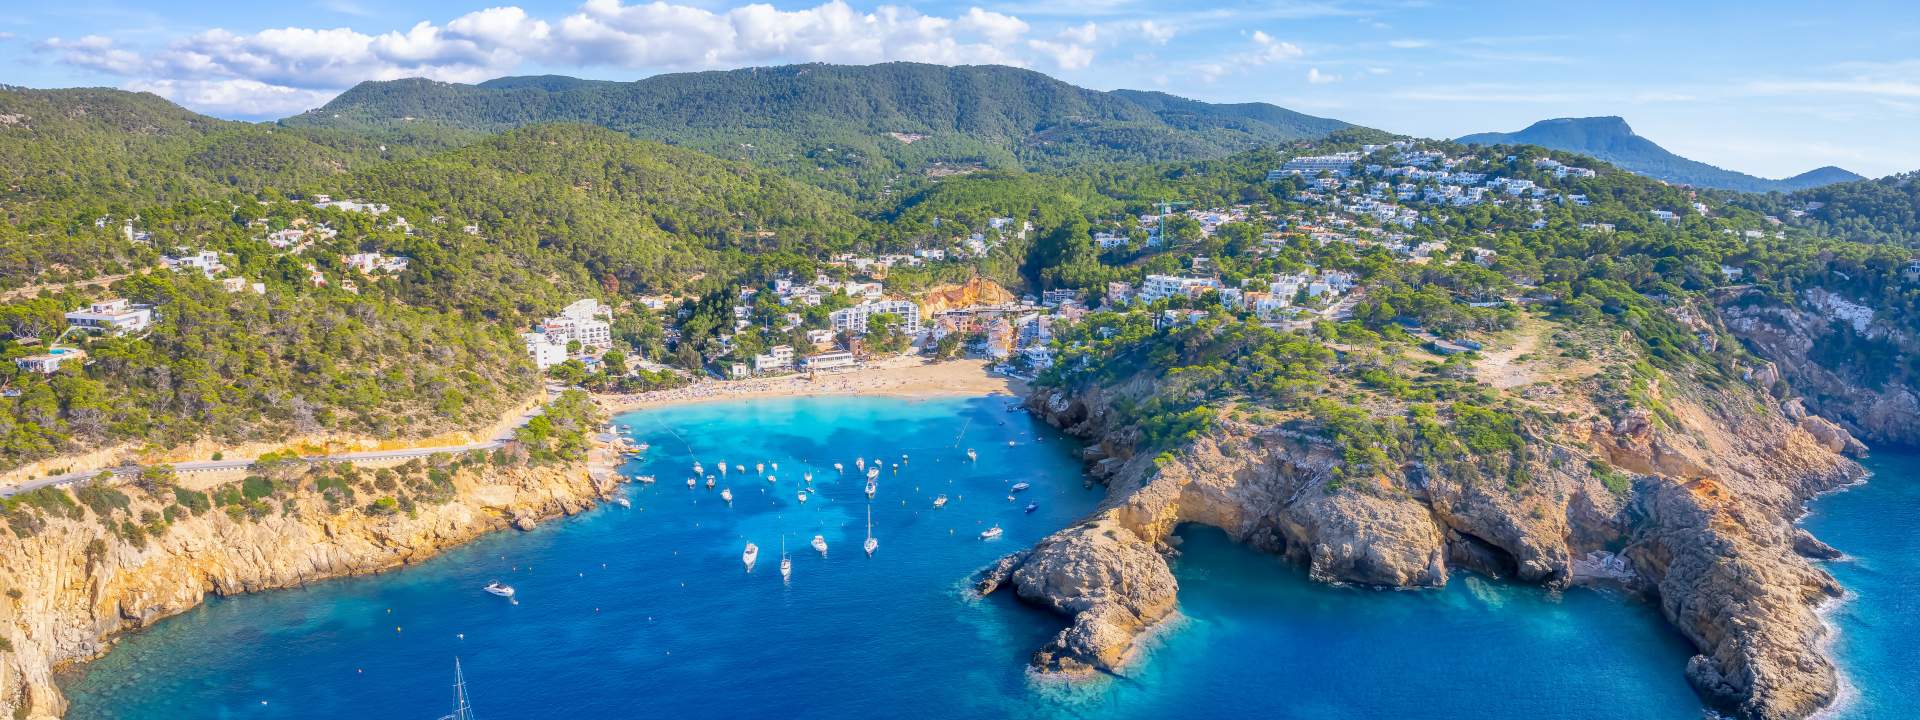 Ibiza, una isla con calas tan misteriosas como deslumbrantes